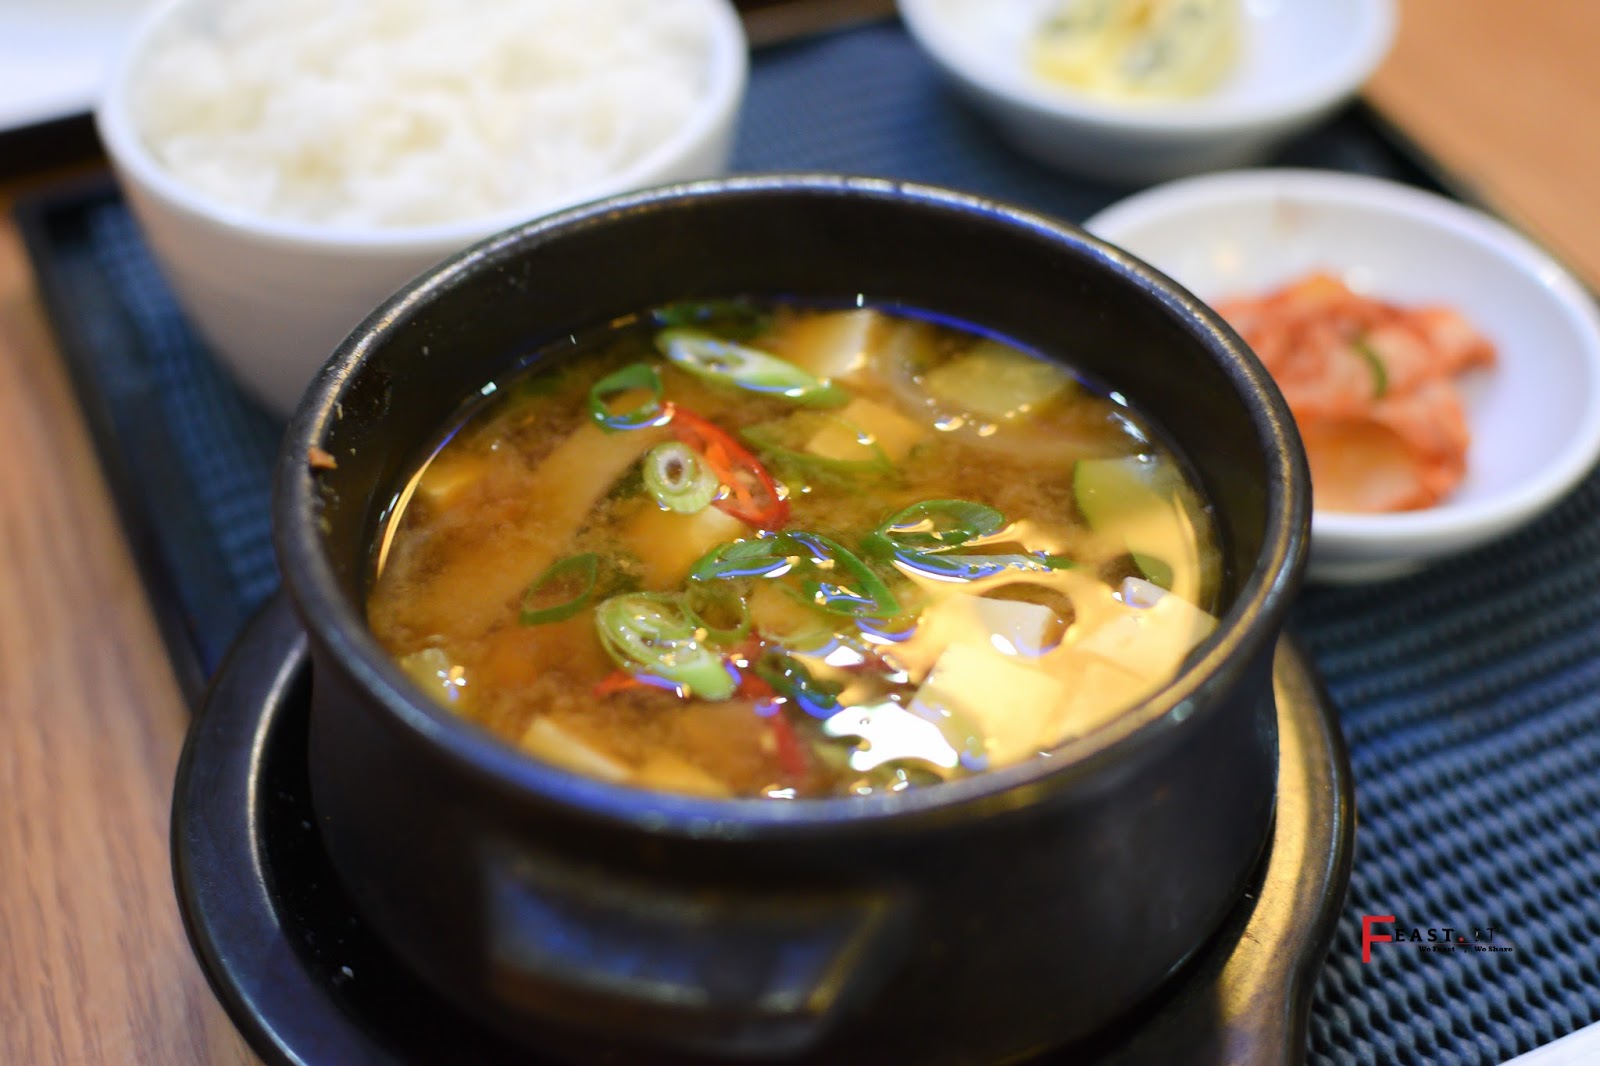 Feast.it - Indonesia Food and travel blogger : Seoul Korean Restaurant